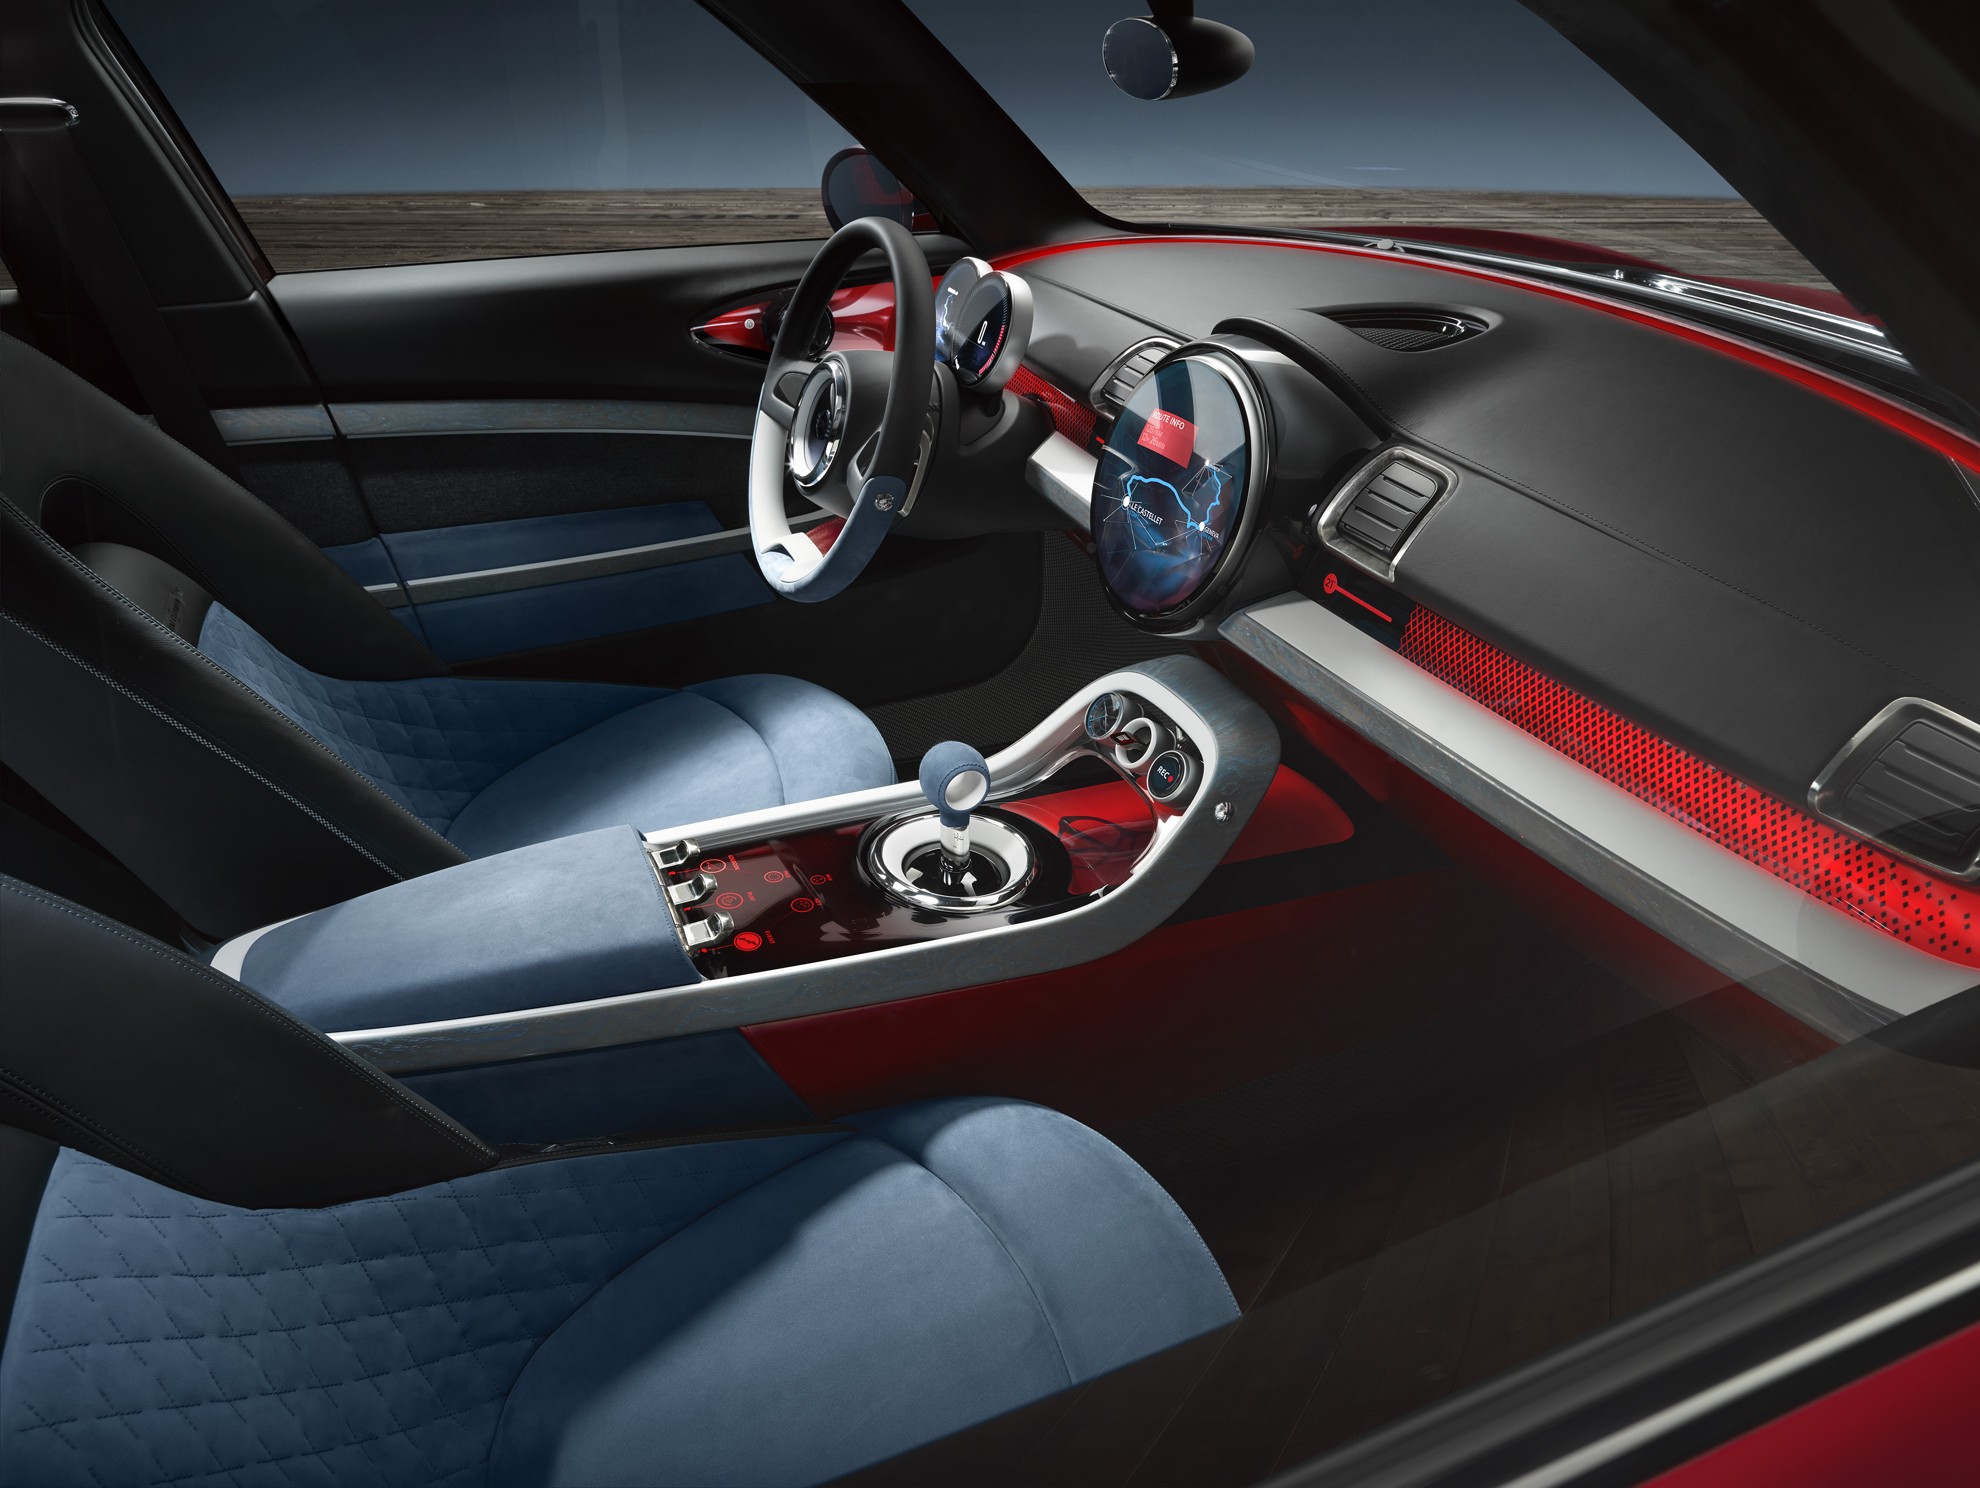 Geneva Motor Show 2014 – MINI Clubman Concept Car